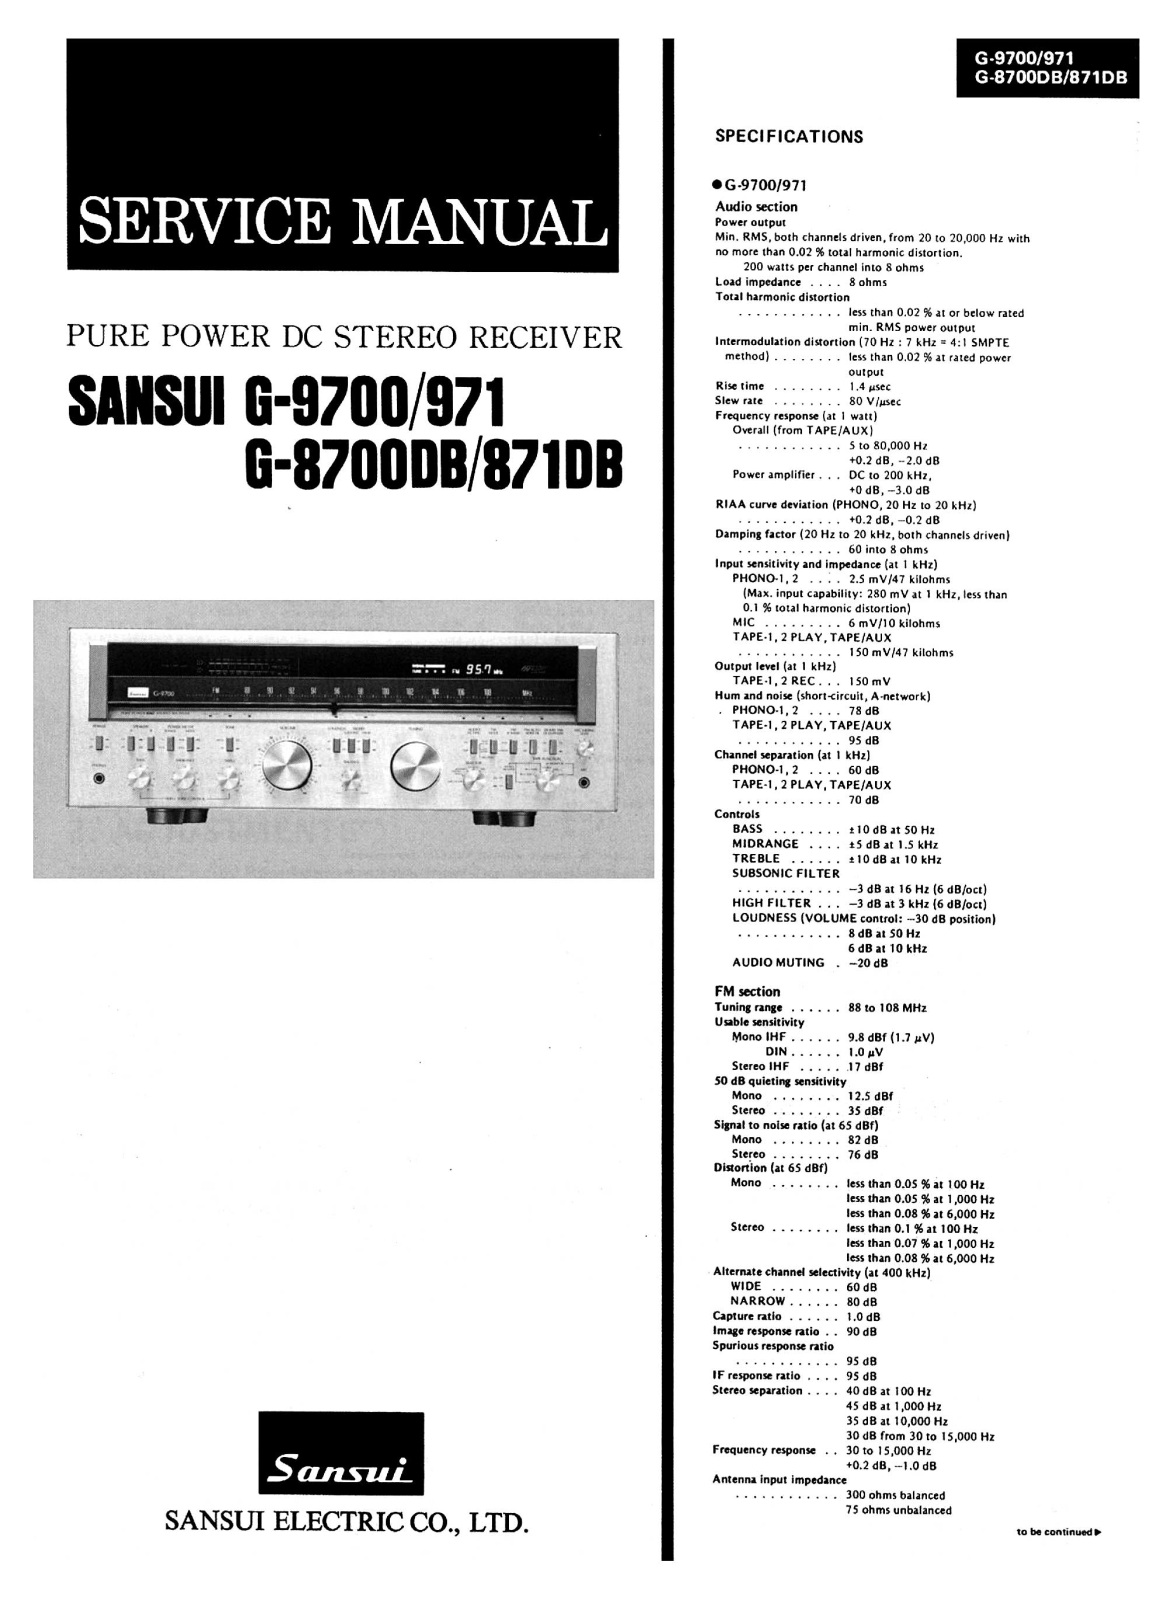 Sansui G-871-DB Service manual